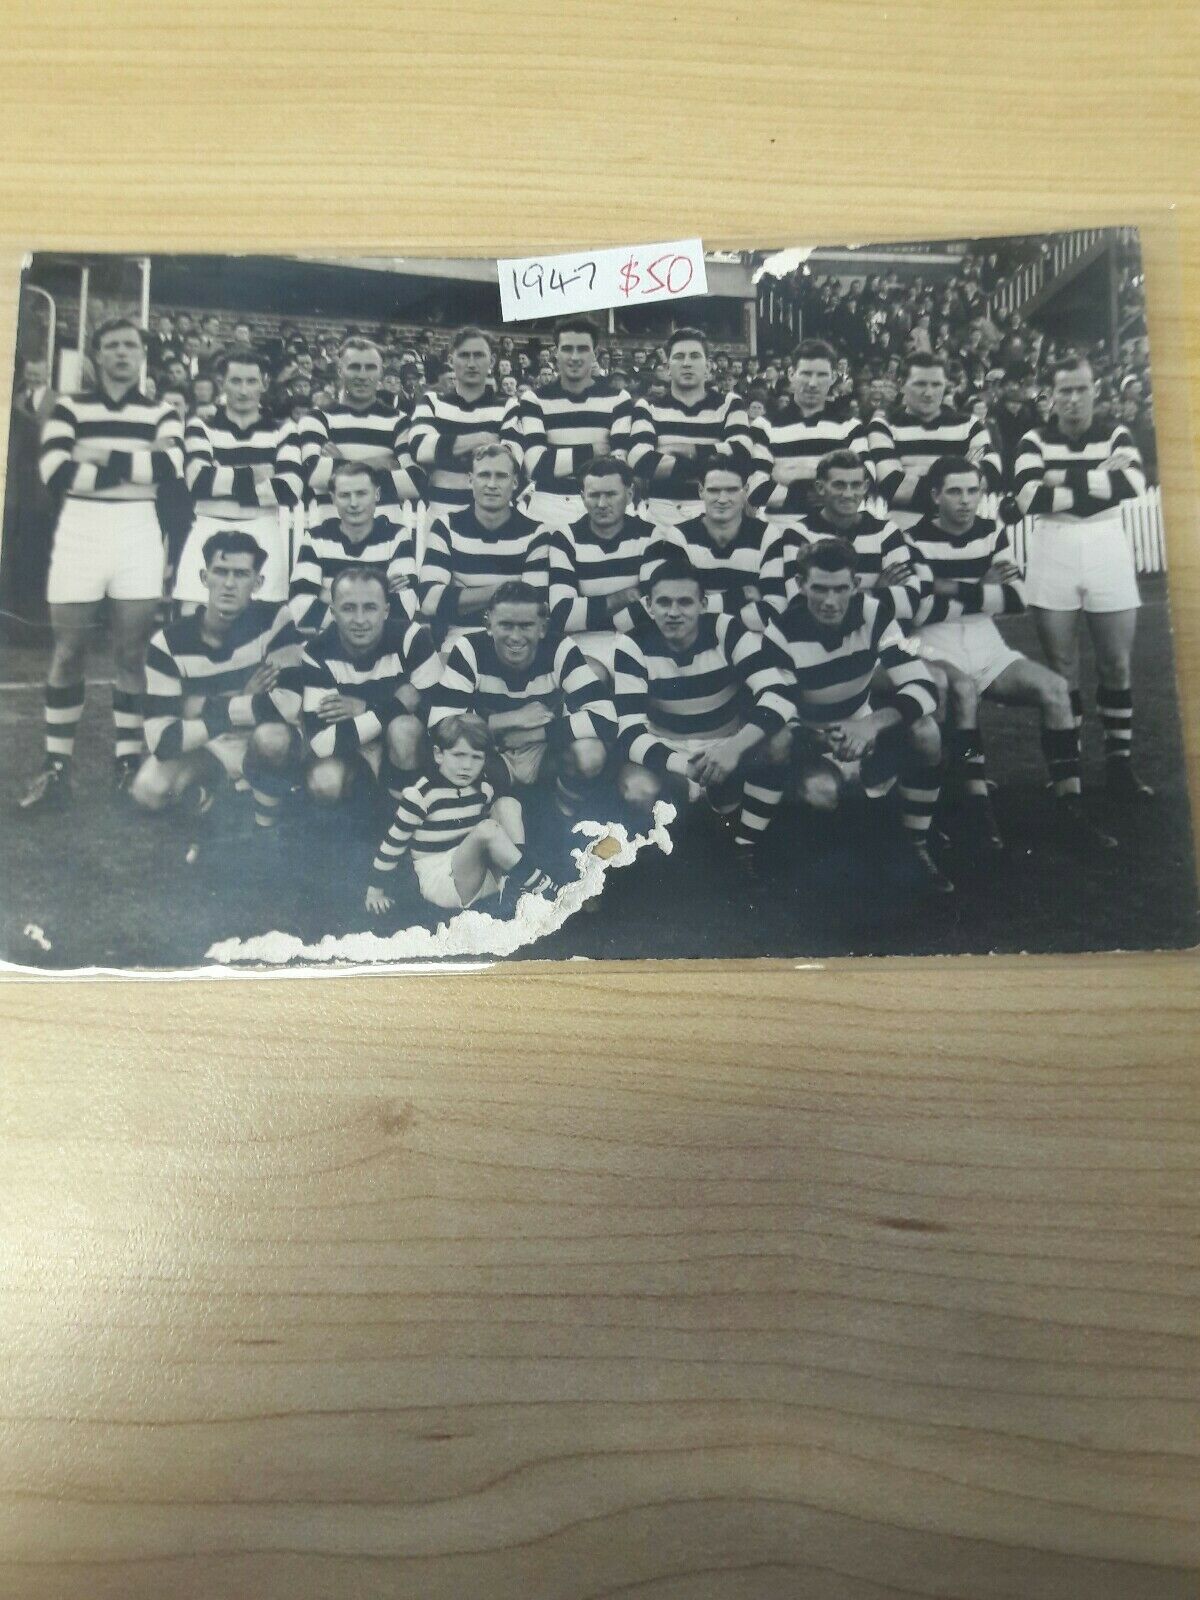 VFL 1947 Geelong Football Club Team Photo Postcard